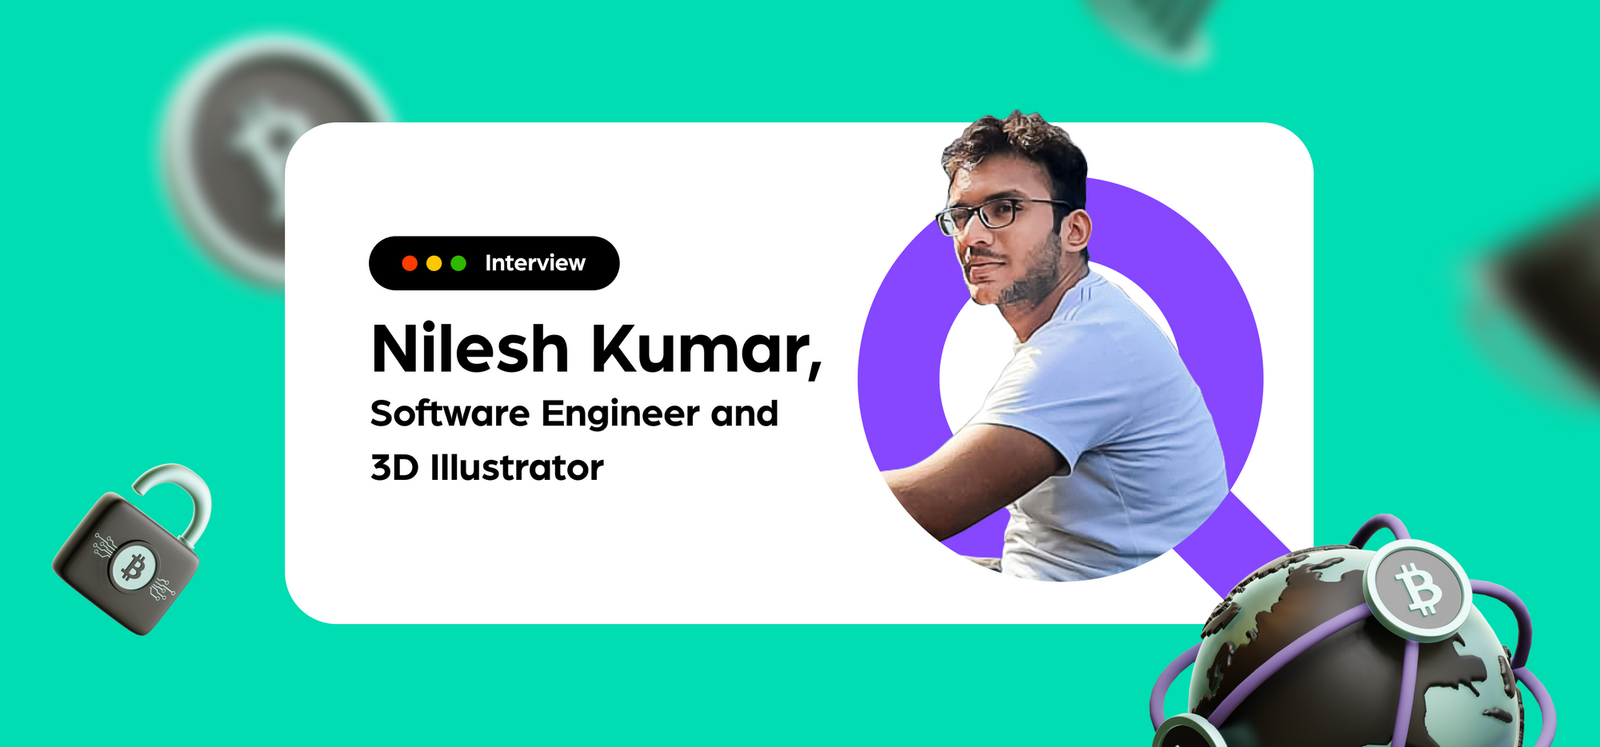 Nilesh Kumar, Software Engineer and 3D Illustrator